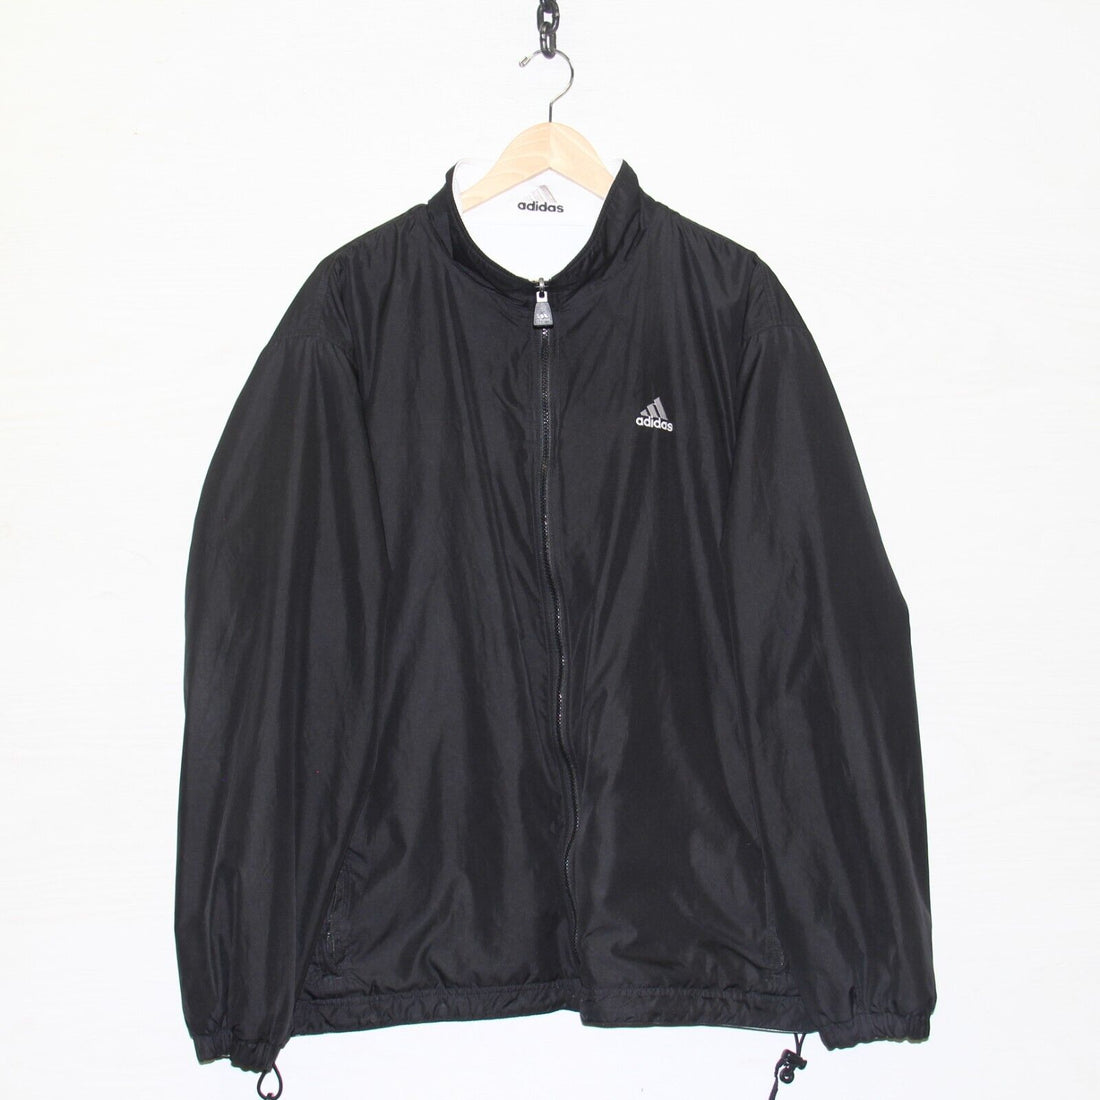 Vintage Adidas Track Jacket Size XL Black White Reversible 90s